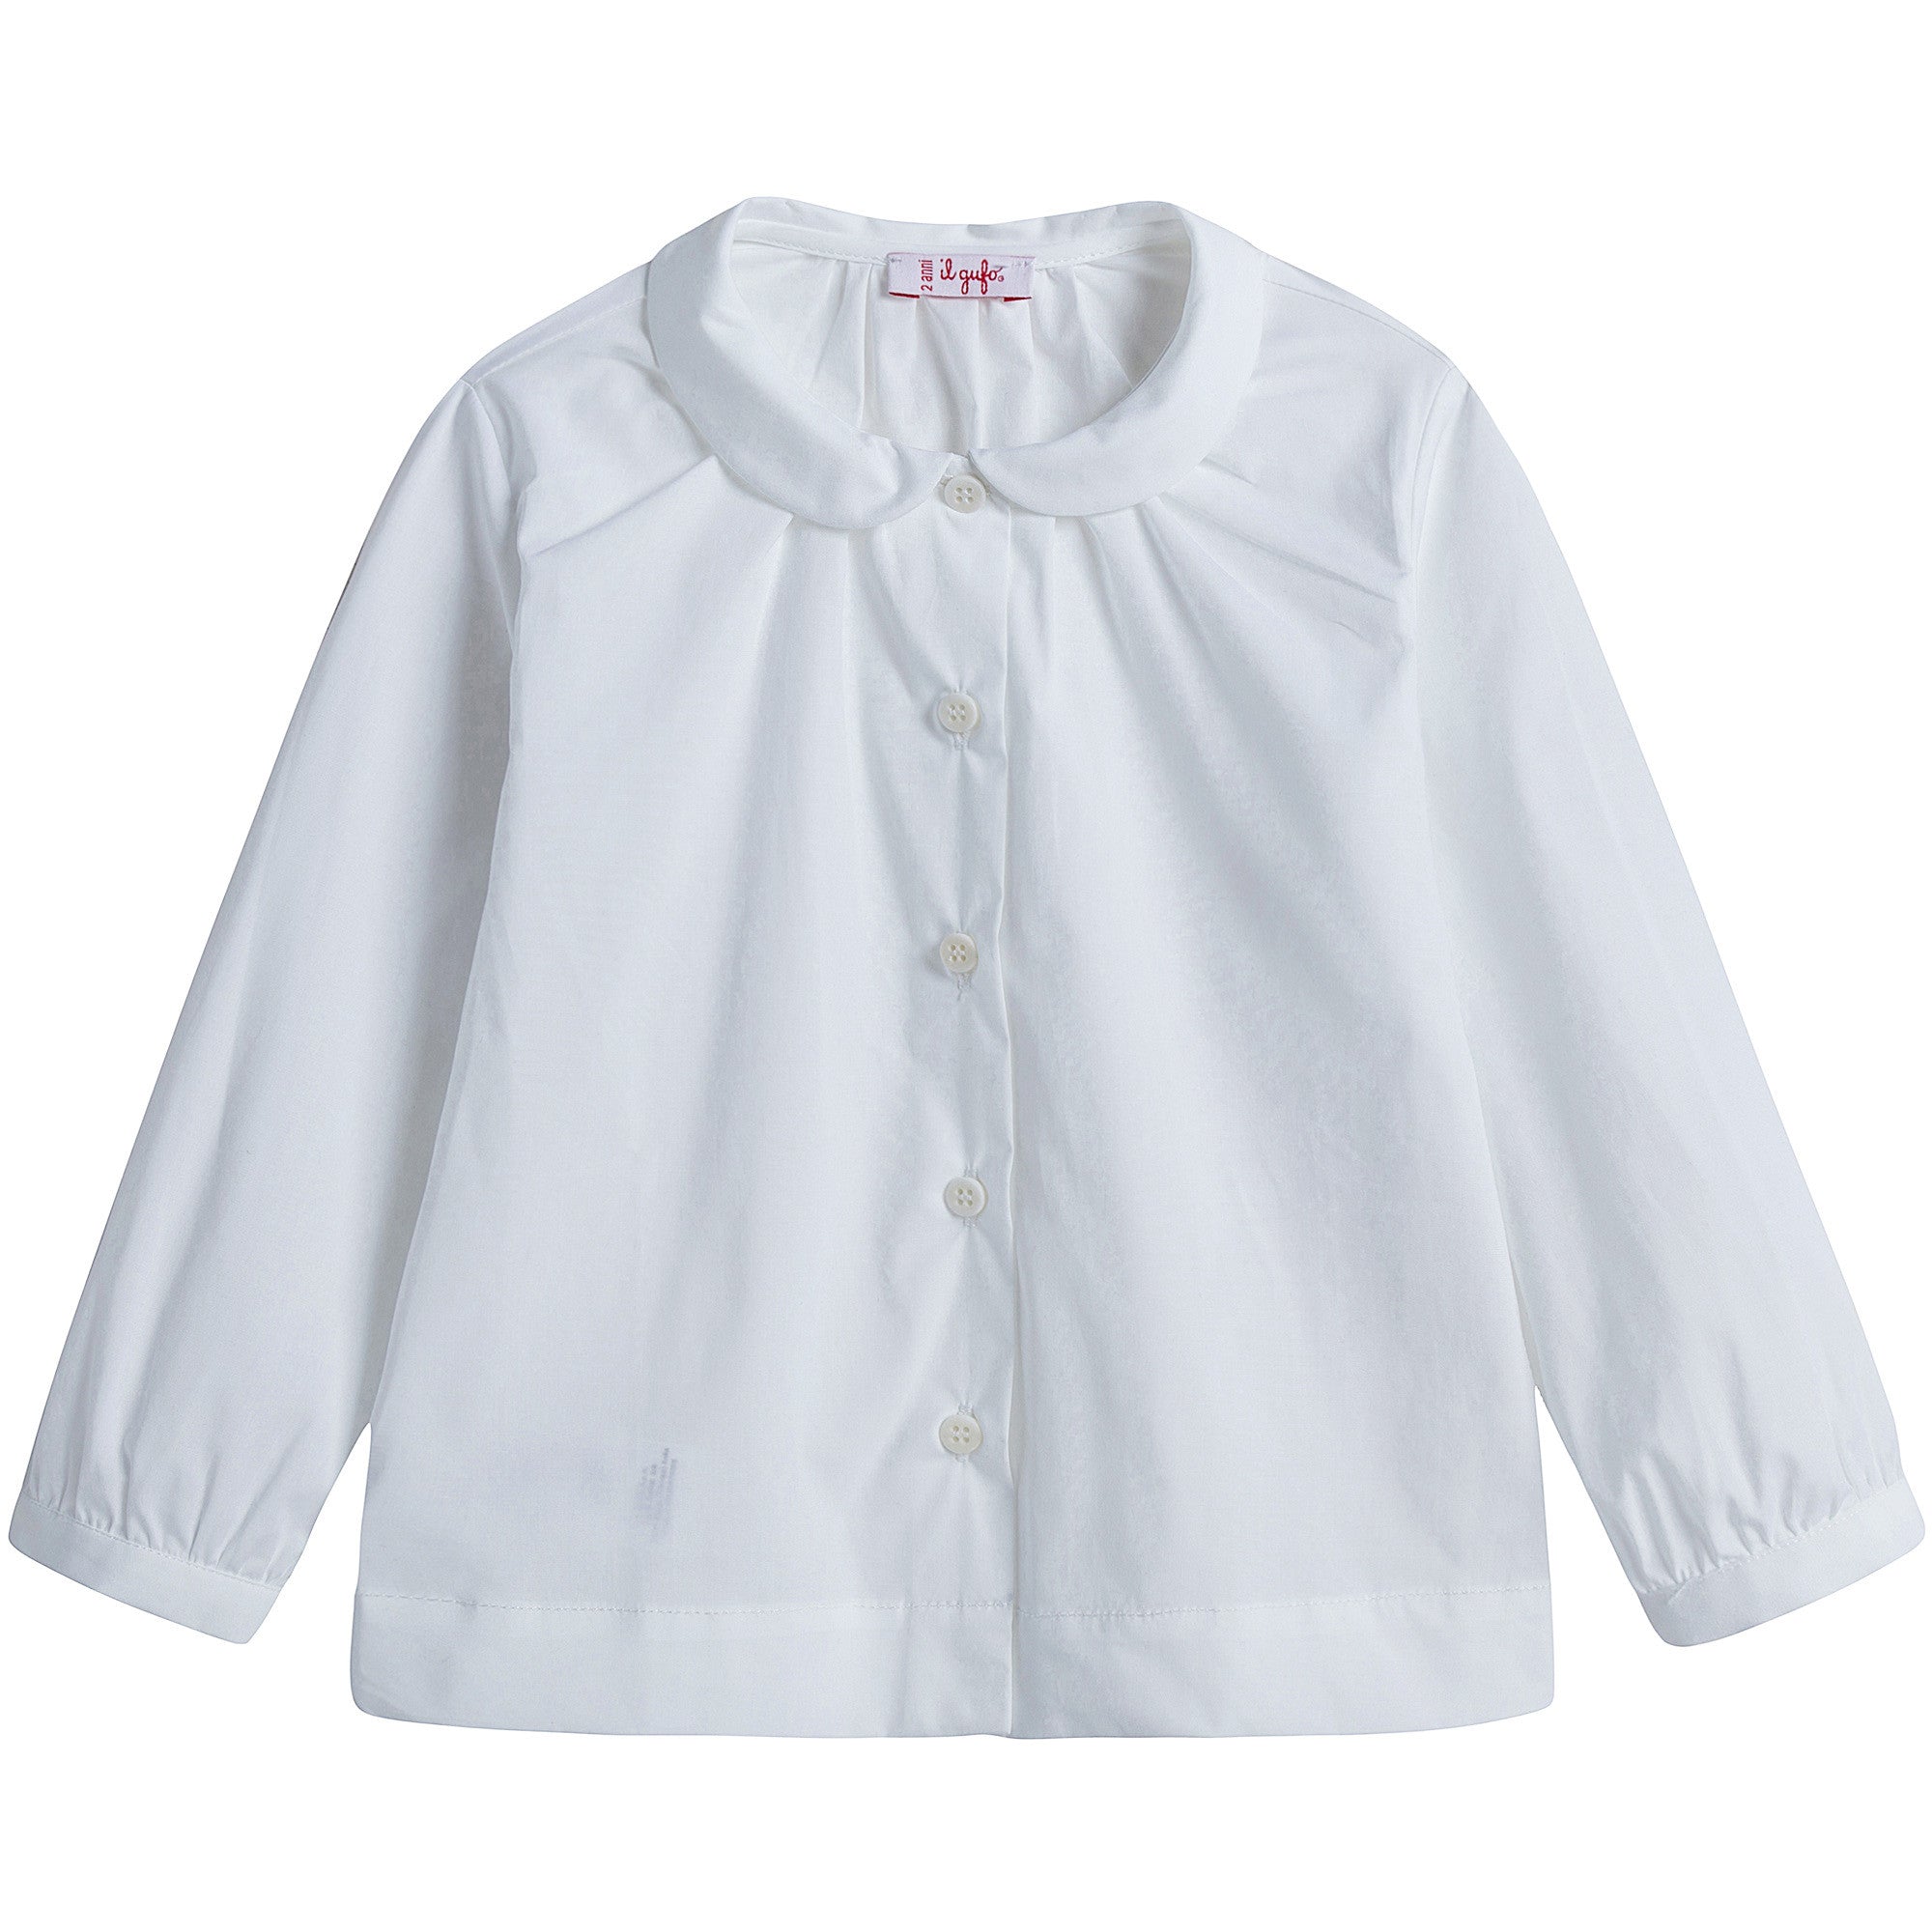 Girls White Cotton Blouse - CÉMAROSE | Children's Fashion Store - 1